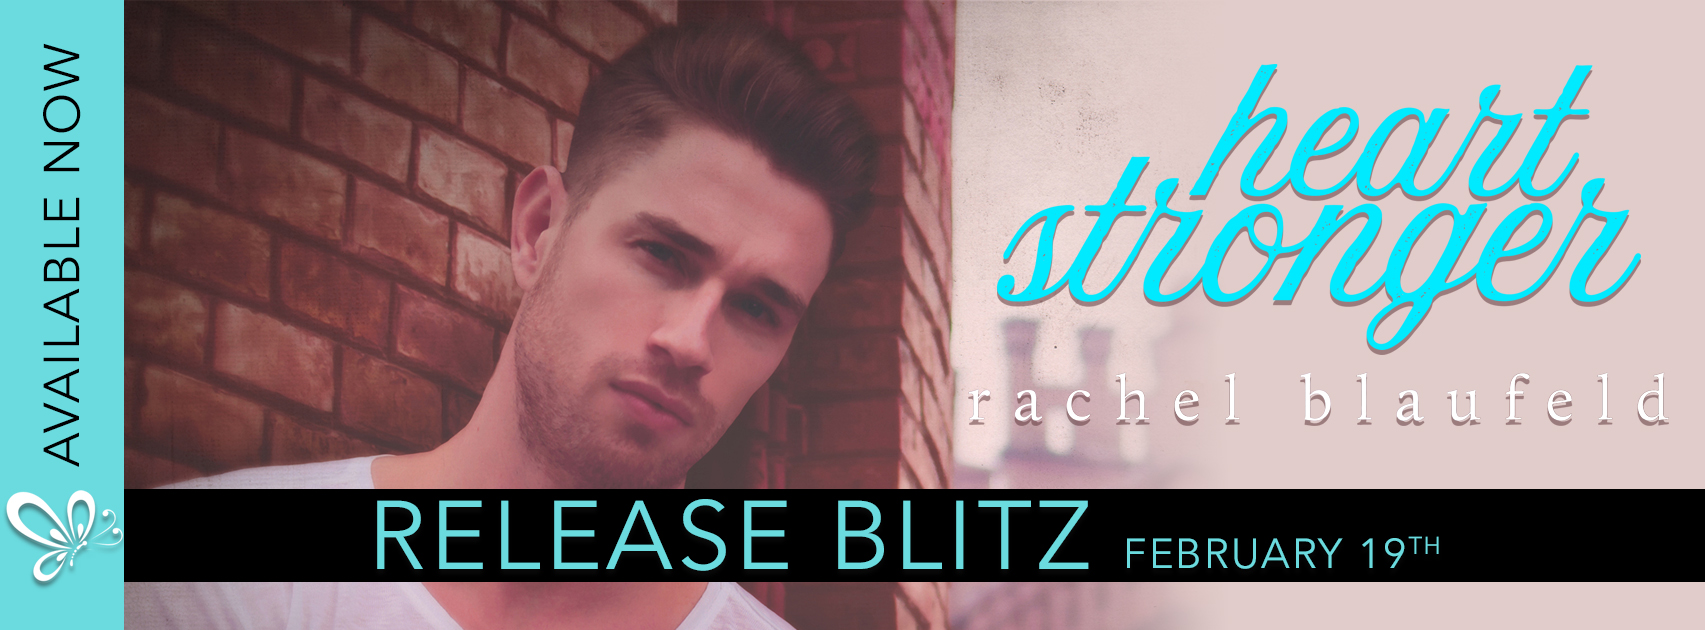 Release Blitz:  Heart Stronger by Rachel Blaufeld